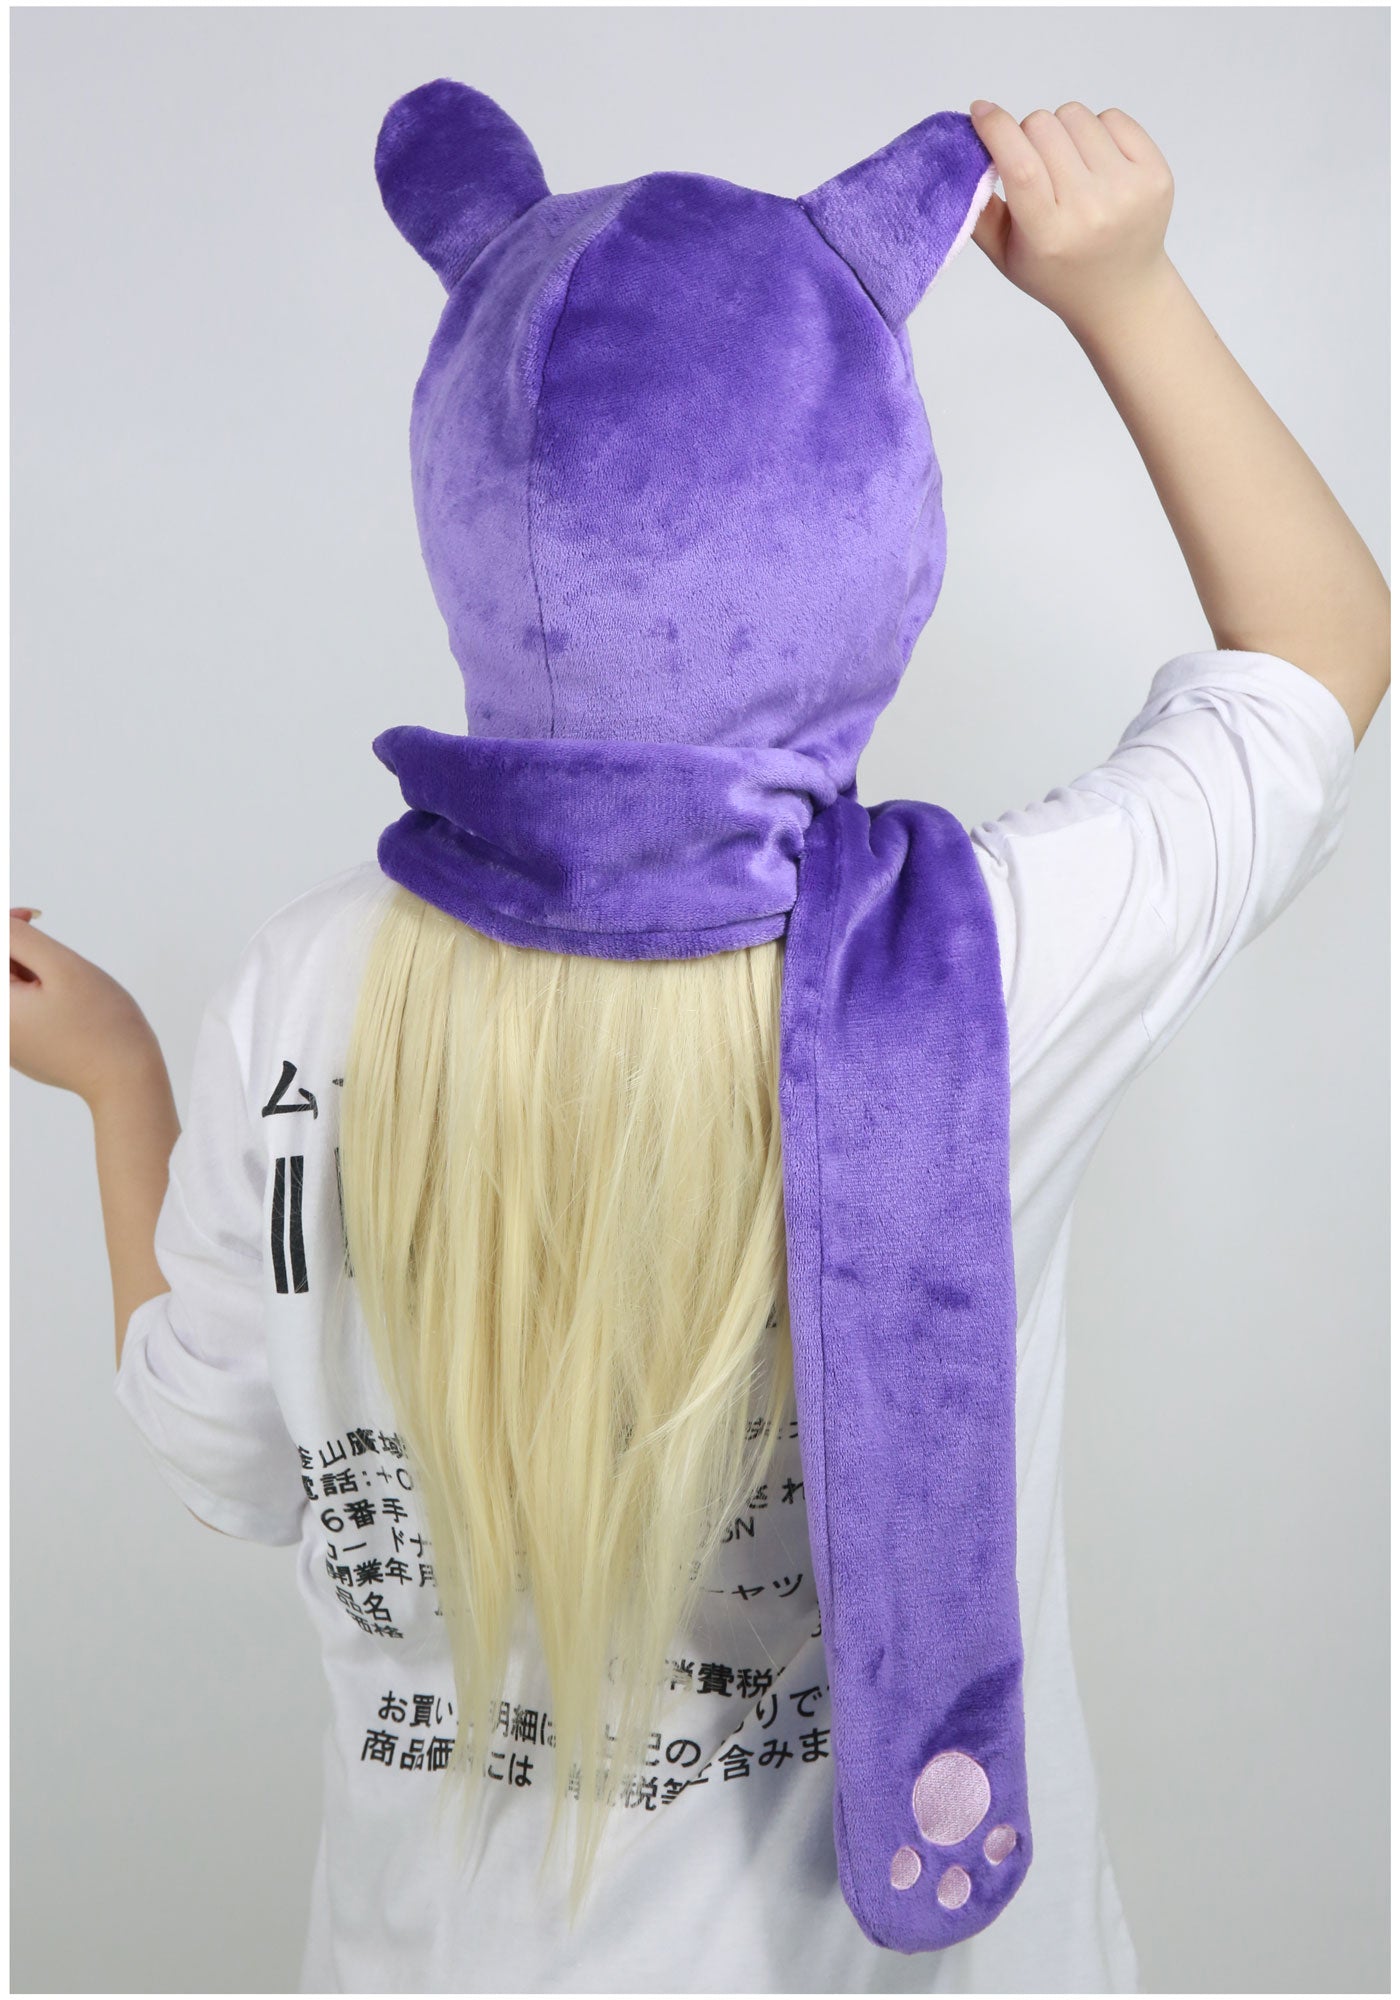 DAZCOS Sailor Luna Hat Cosplay Kigurumi Cap for Women Soft Plush Coif with Cute Moon Pattern Purple